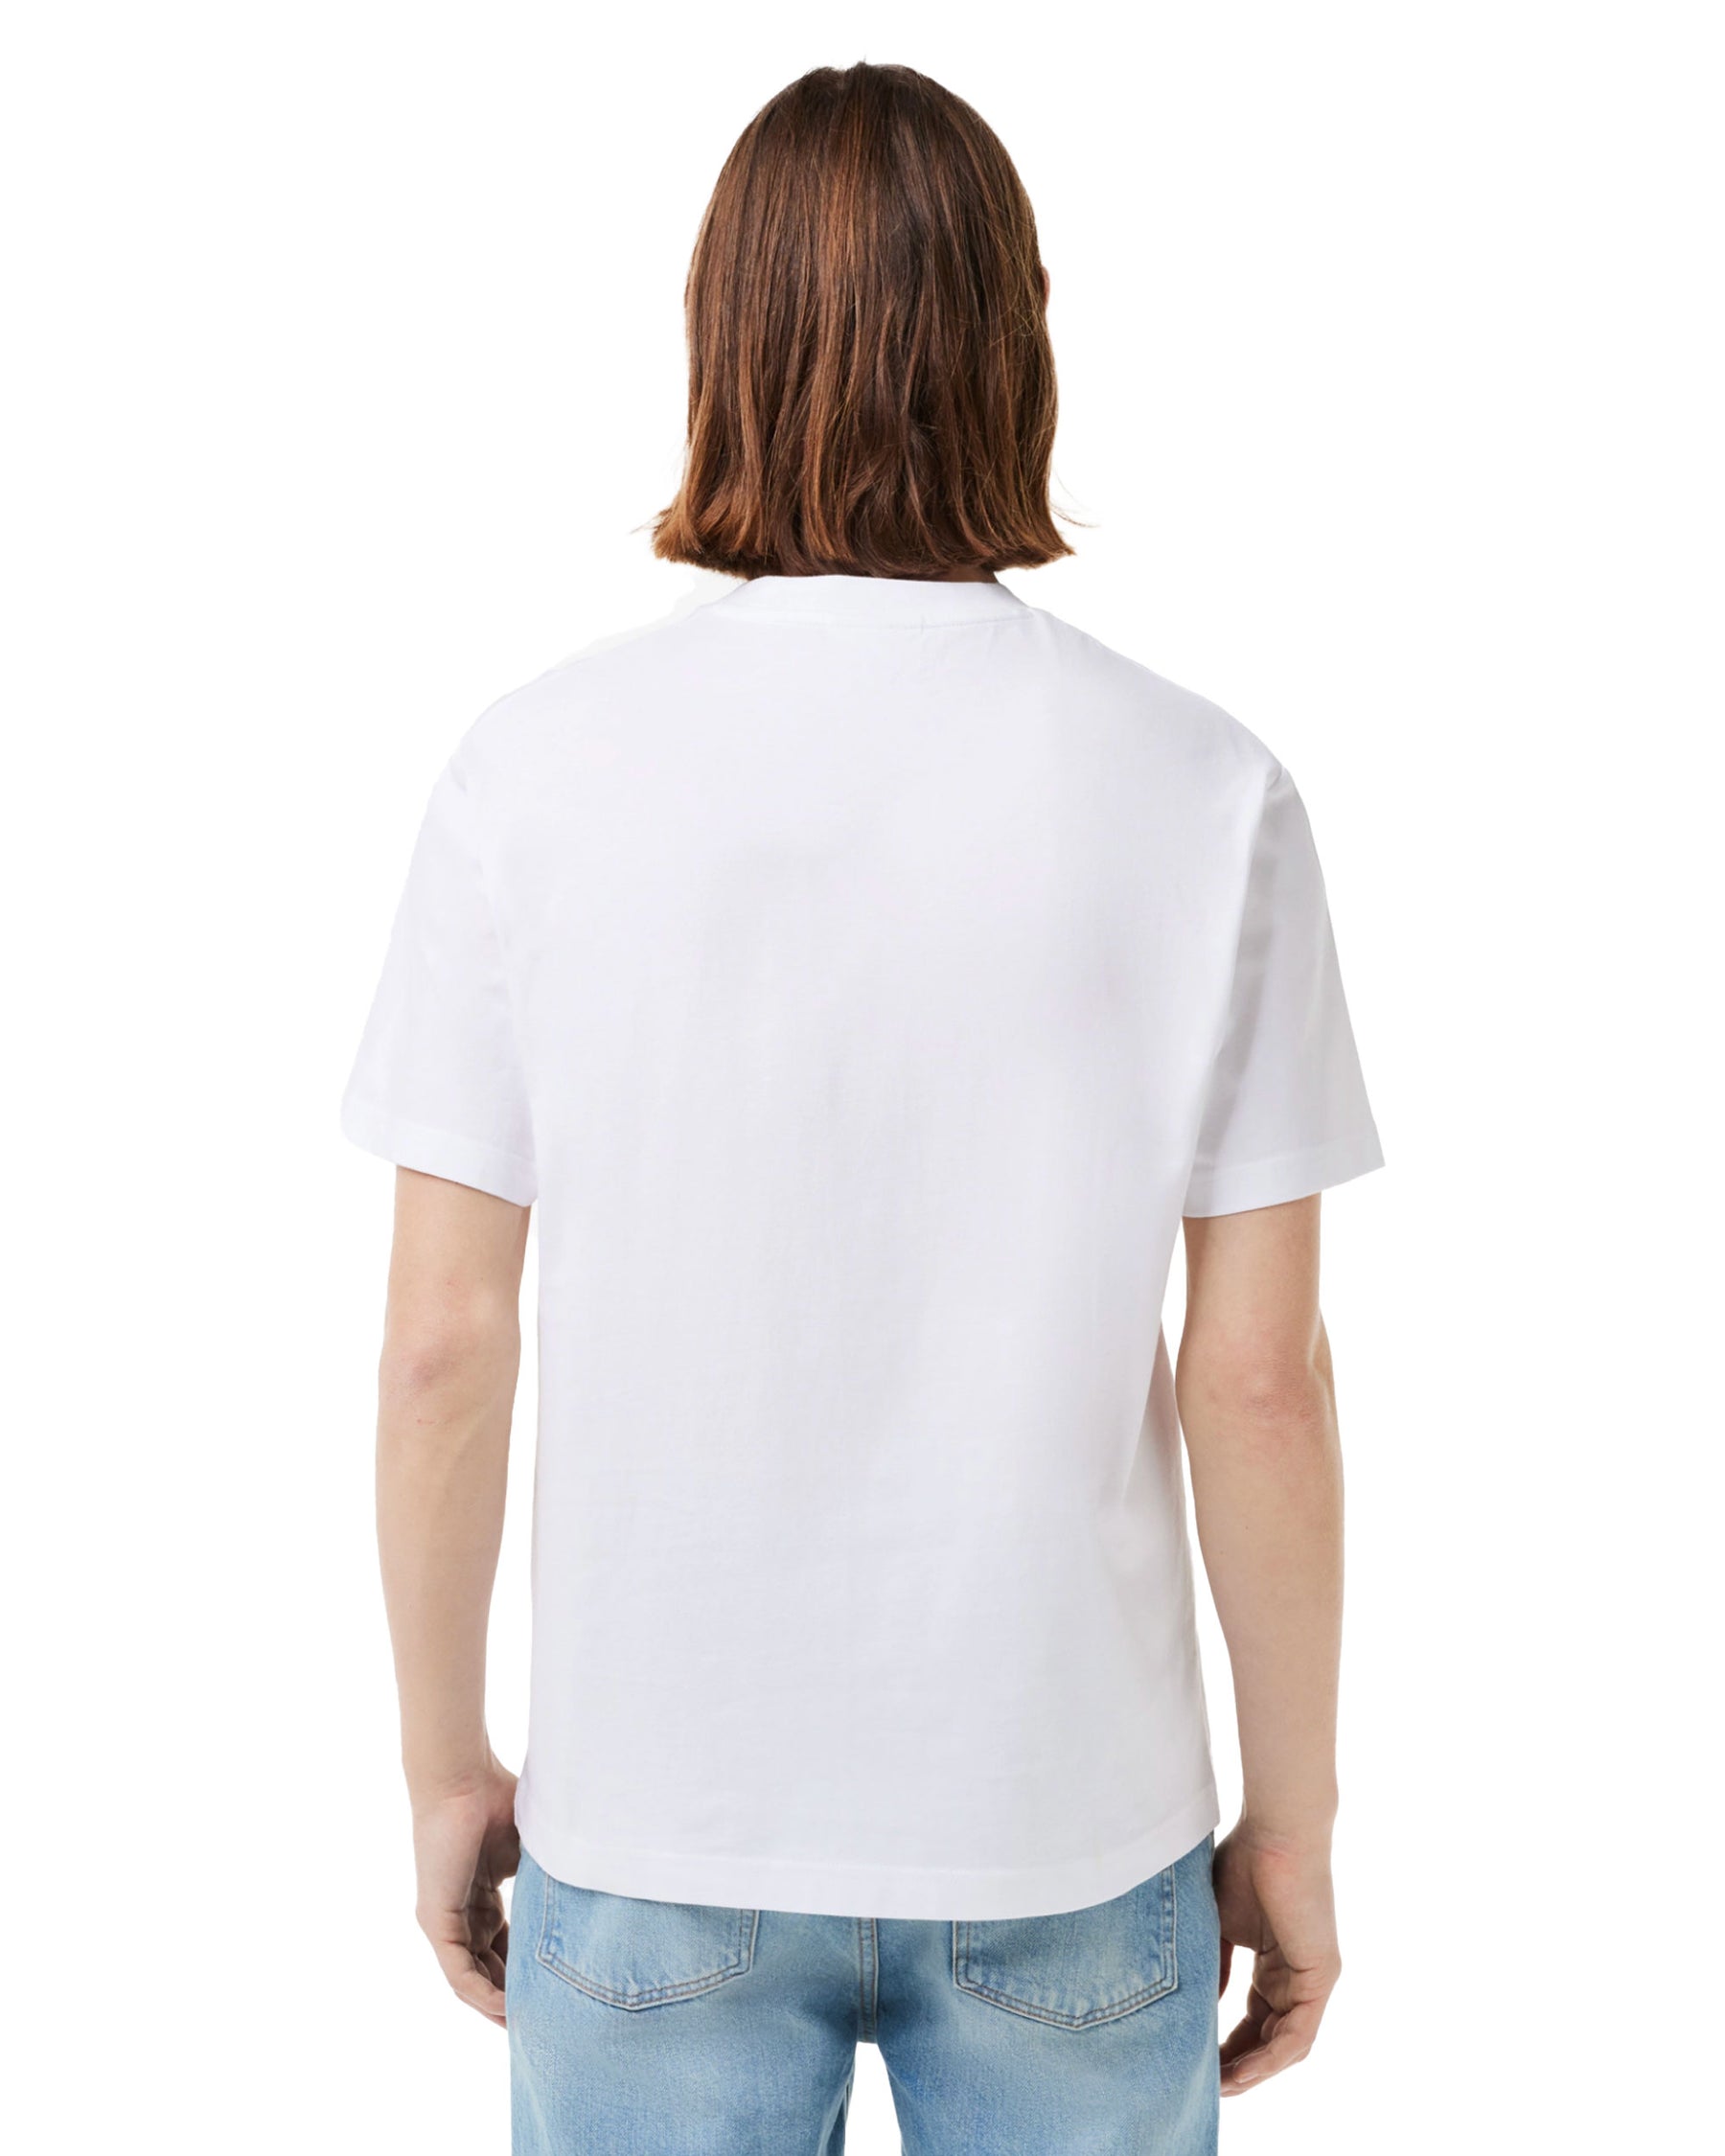 T-Shirt Uomo Lacoste Classic Logo Bianco